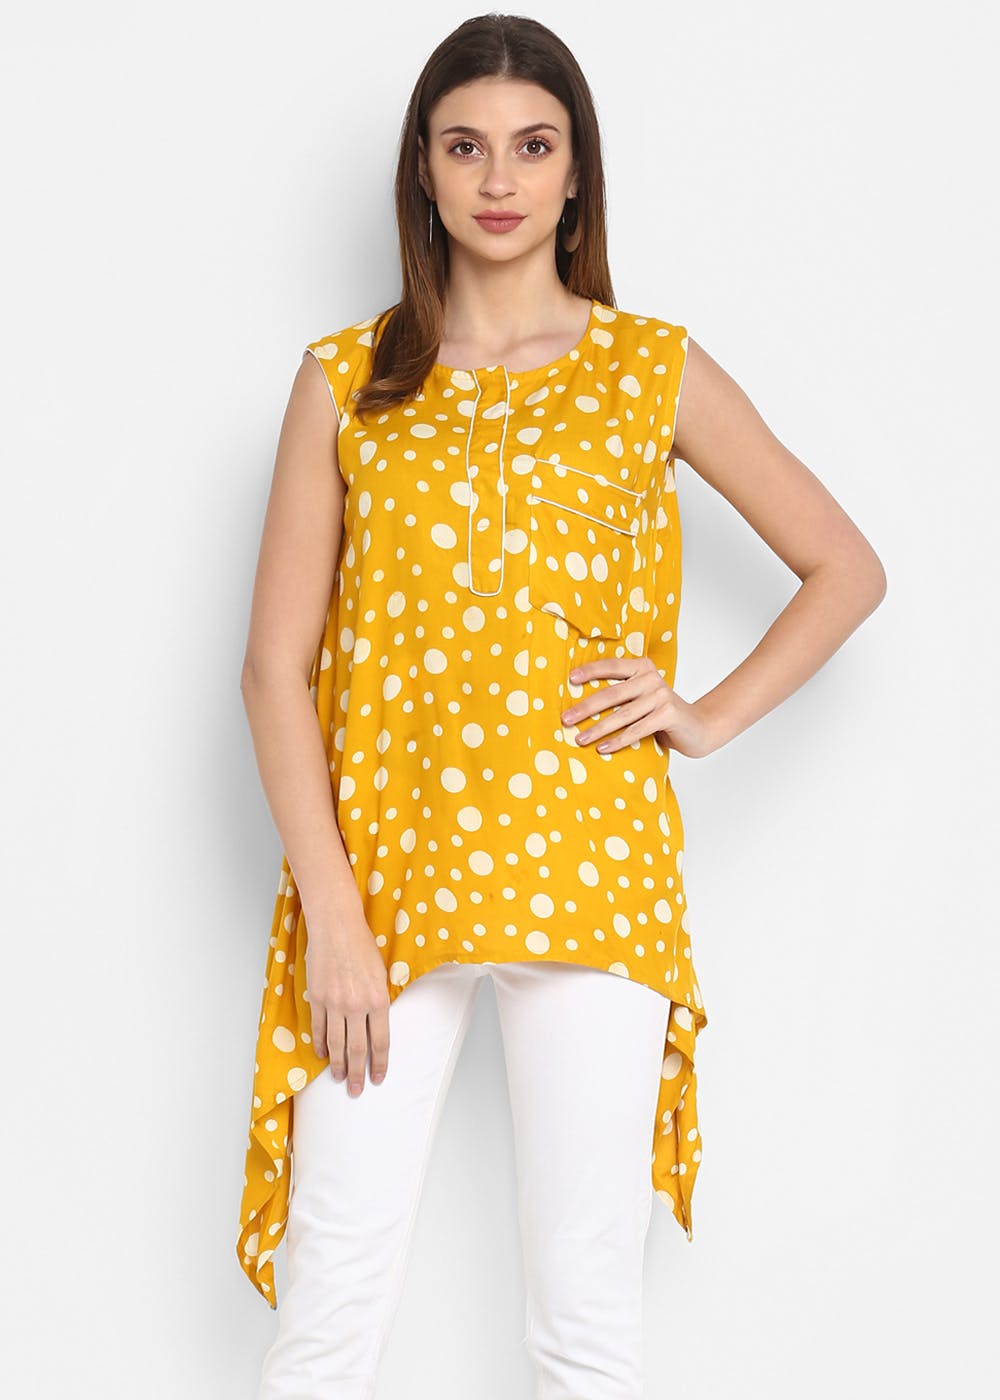 Drop Hem Detail Yellow Big Polka Dots Printed Sleeveless Top